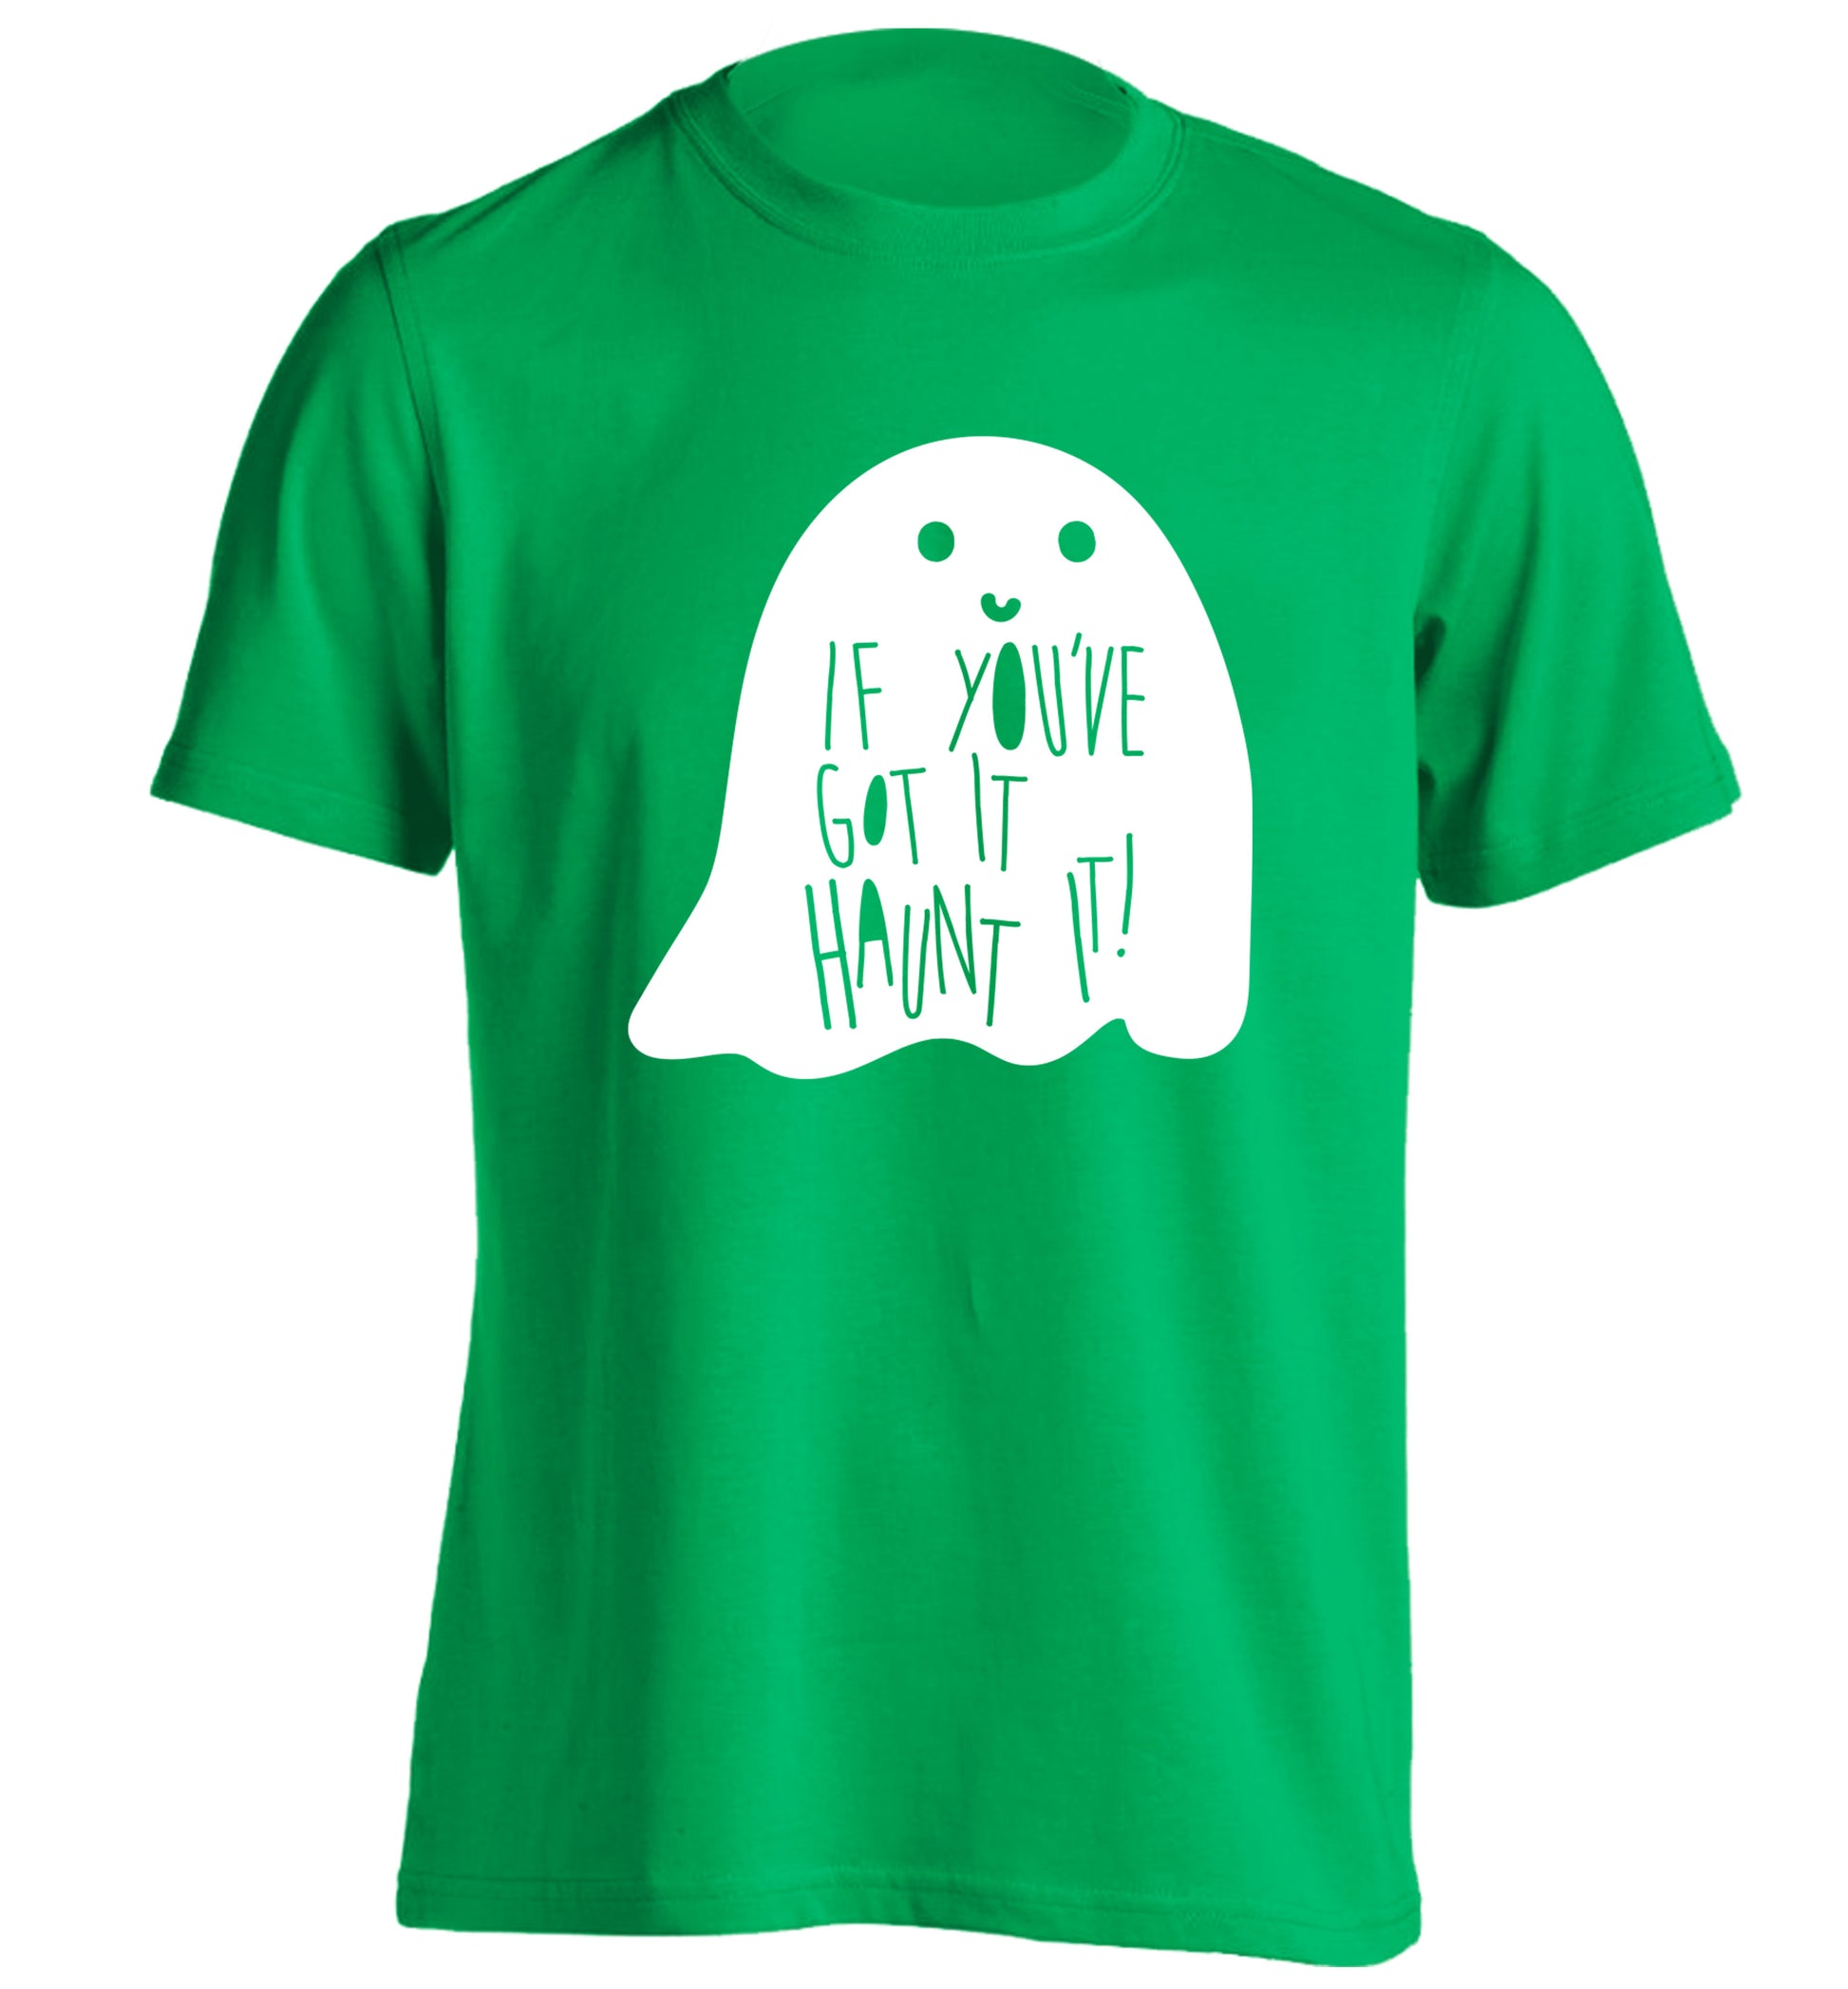 If you've got it haunt it adults unisex green Tshirt 2XL